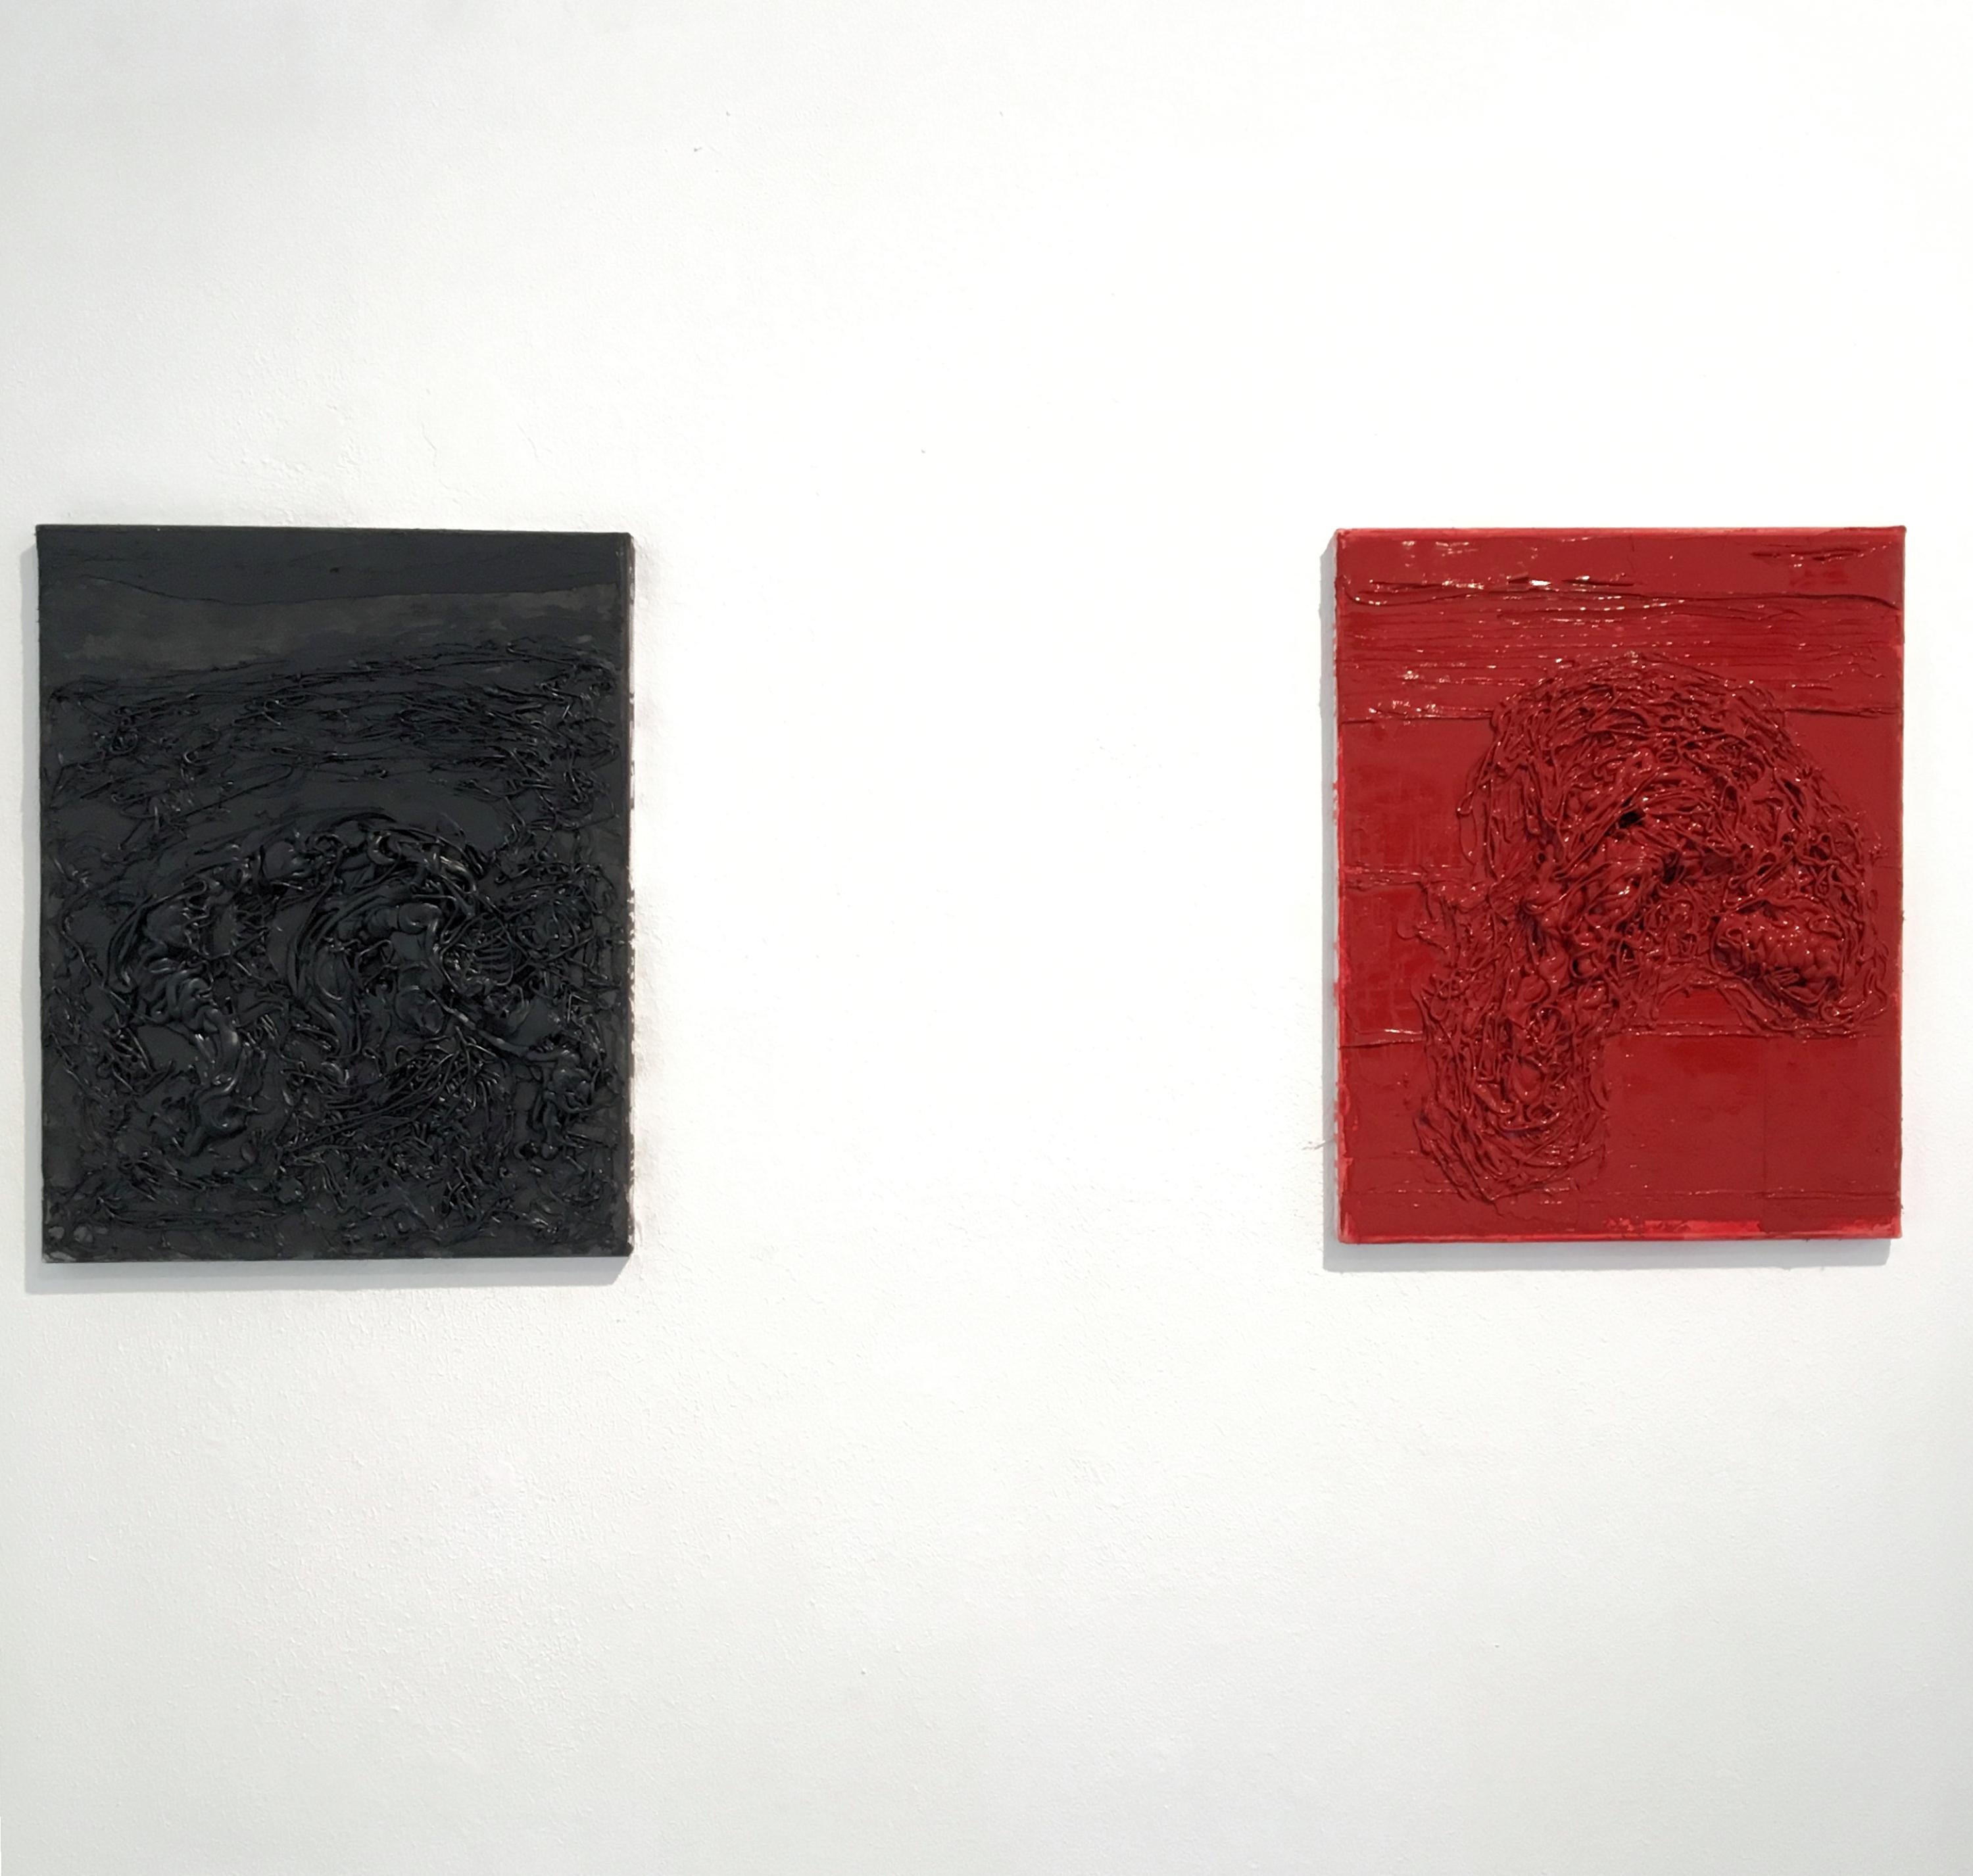 Untitled 02 - 21st Century, Organic, Black, Minimalist, Abstract, Monochrome - Painting by Zsolt Berszán